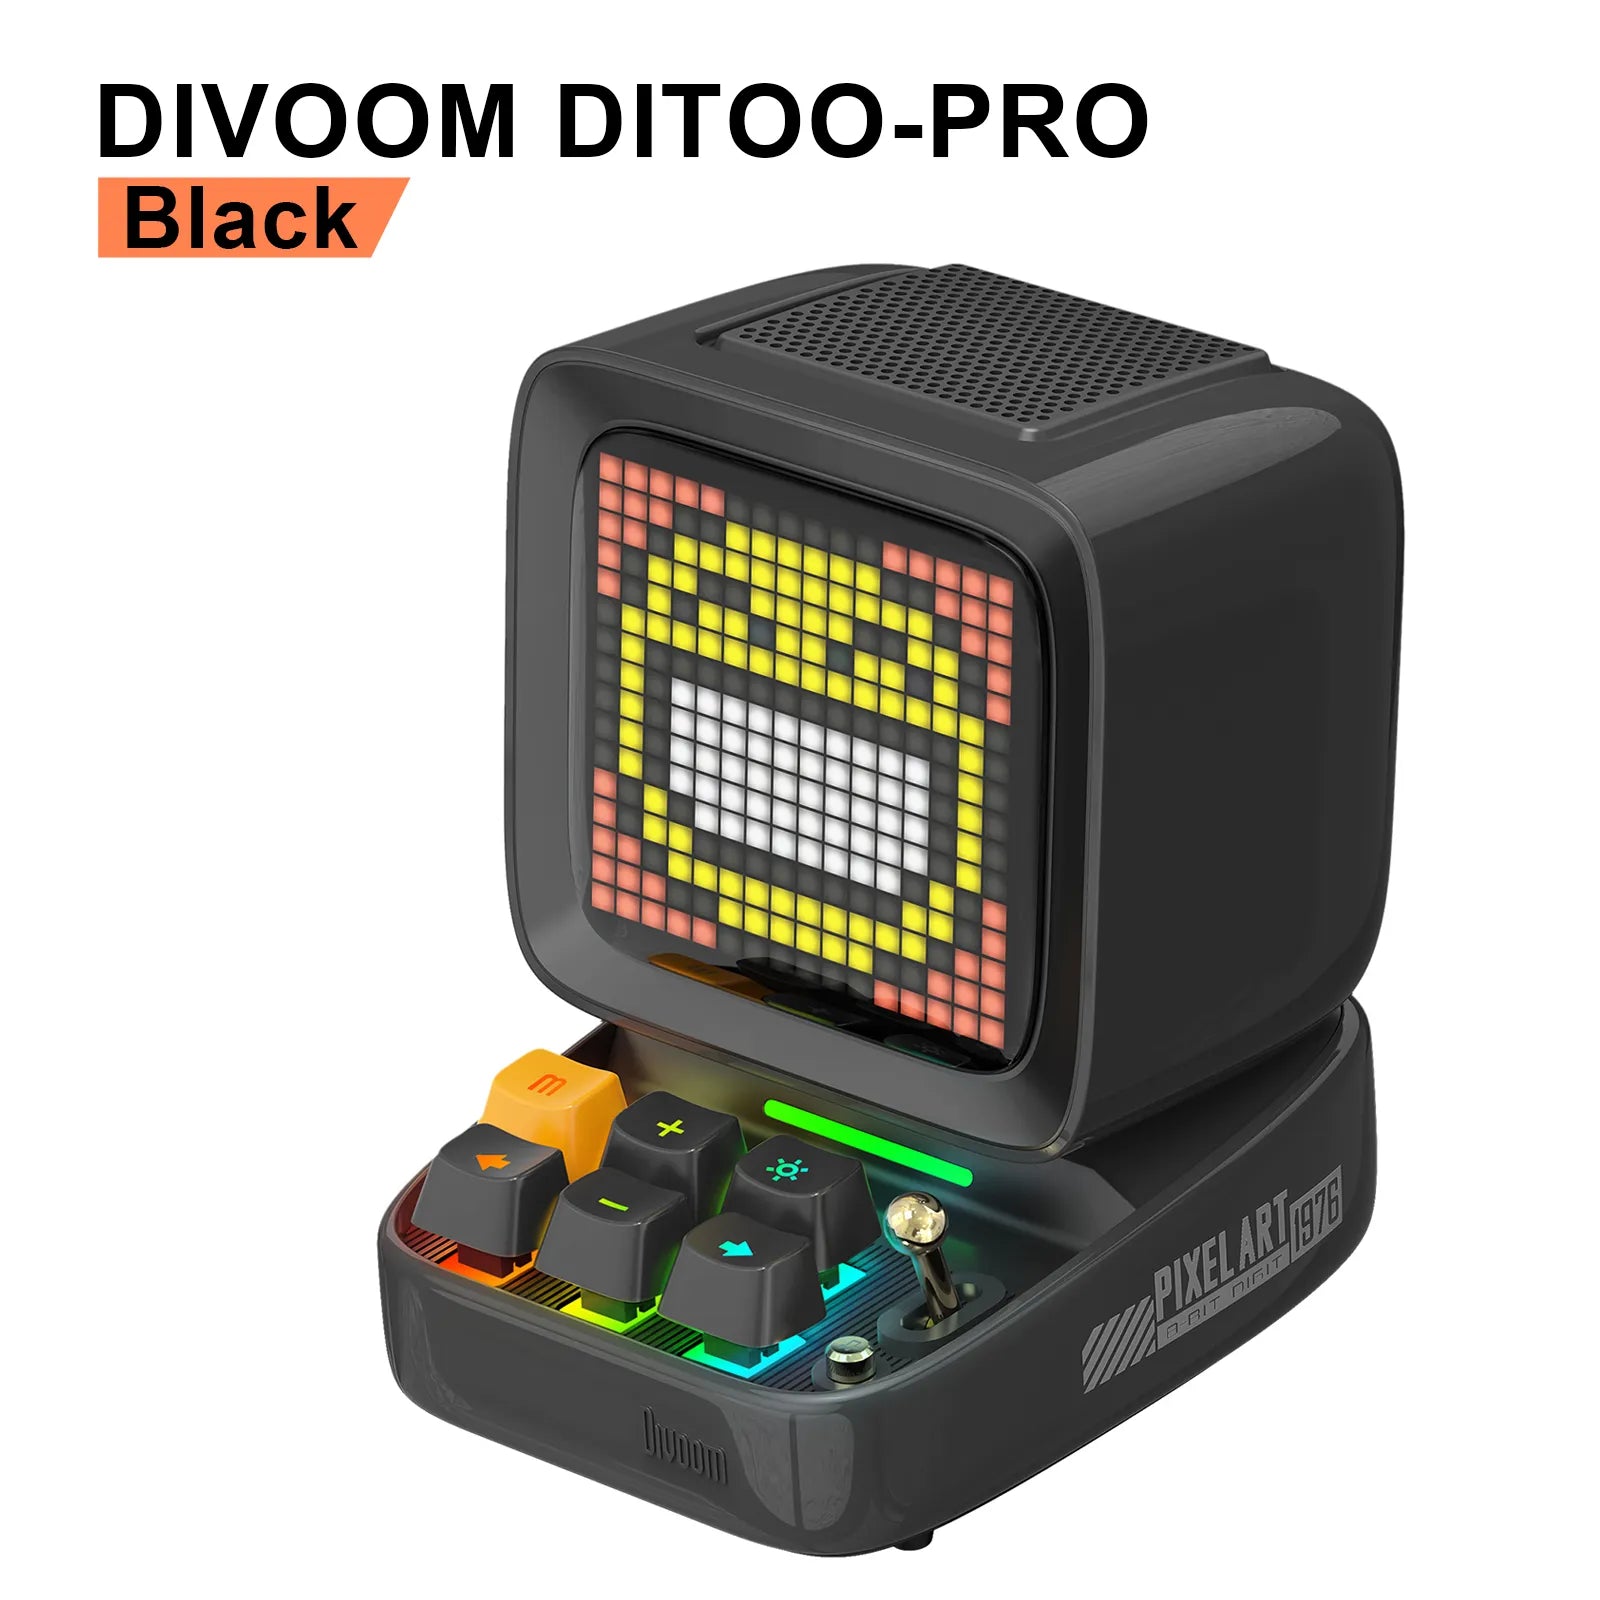 Divoom Ditoo-Pro Retro Pixel Art Bluetooth Speaker - Portable, Alarm Clock, DIY LED Display Board, Cute Gift, Home Light Decoration Ditoo-Pro Black / Poland / Speaker